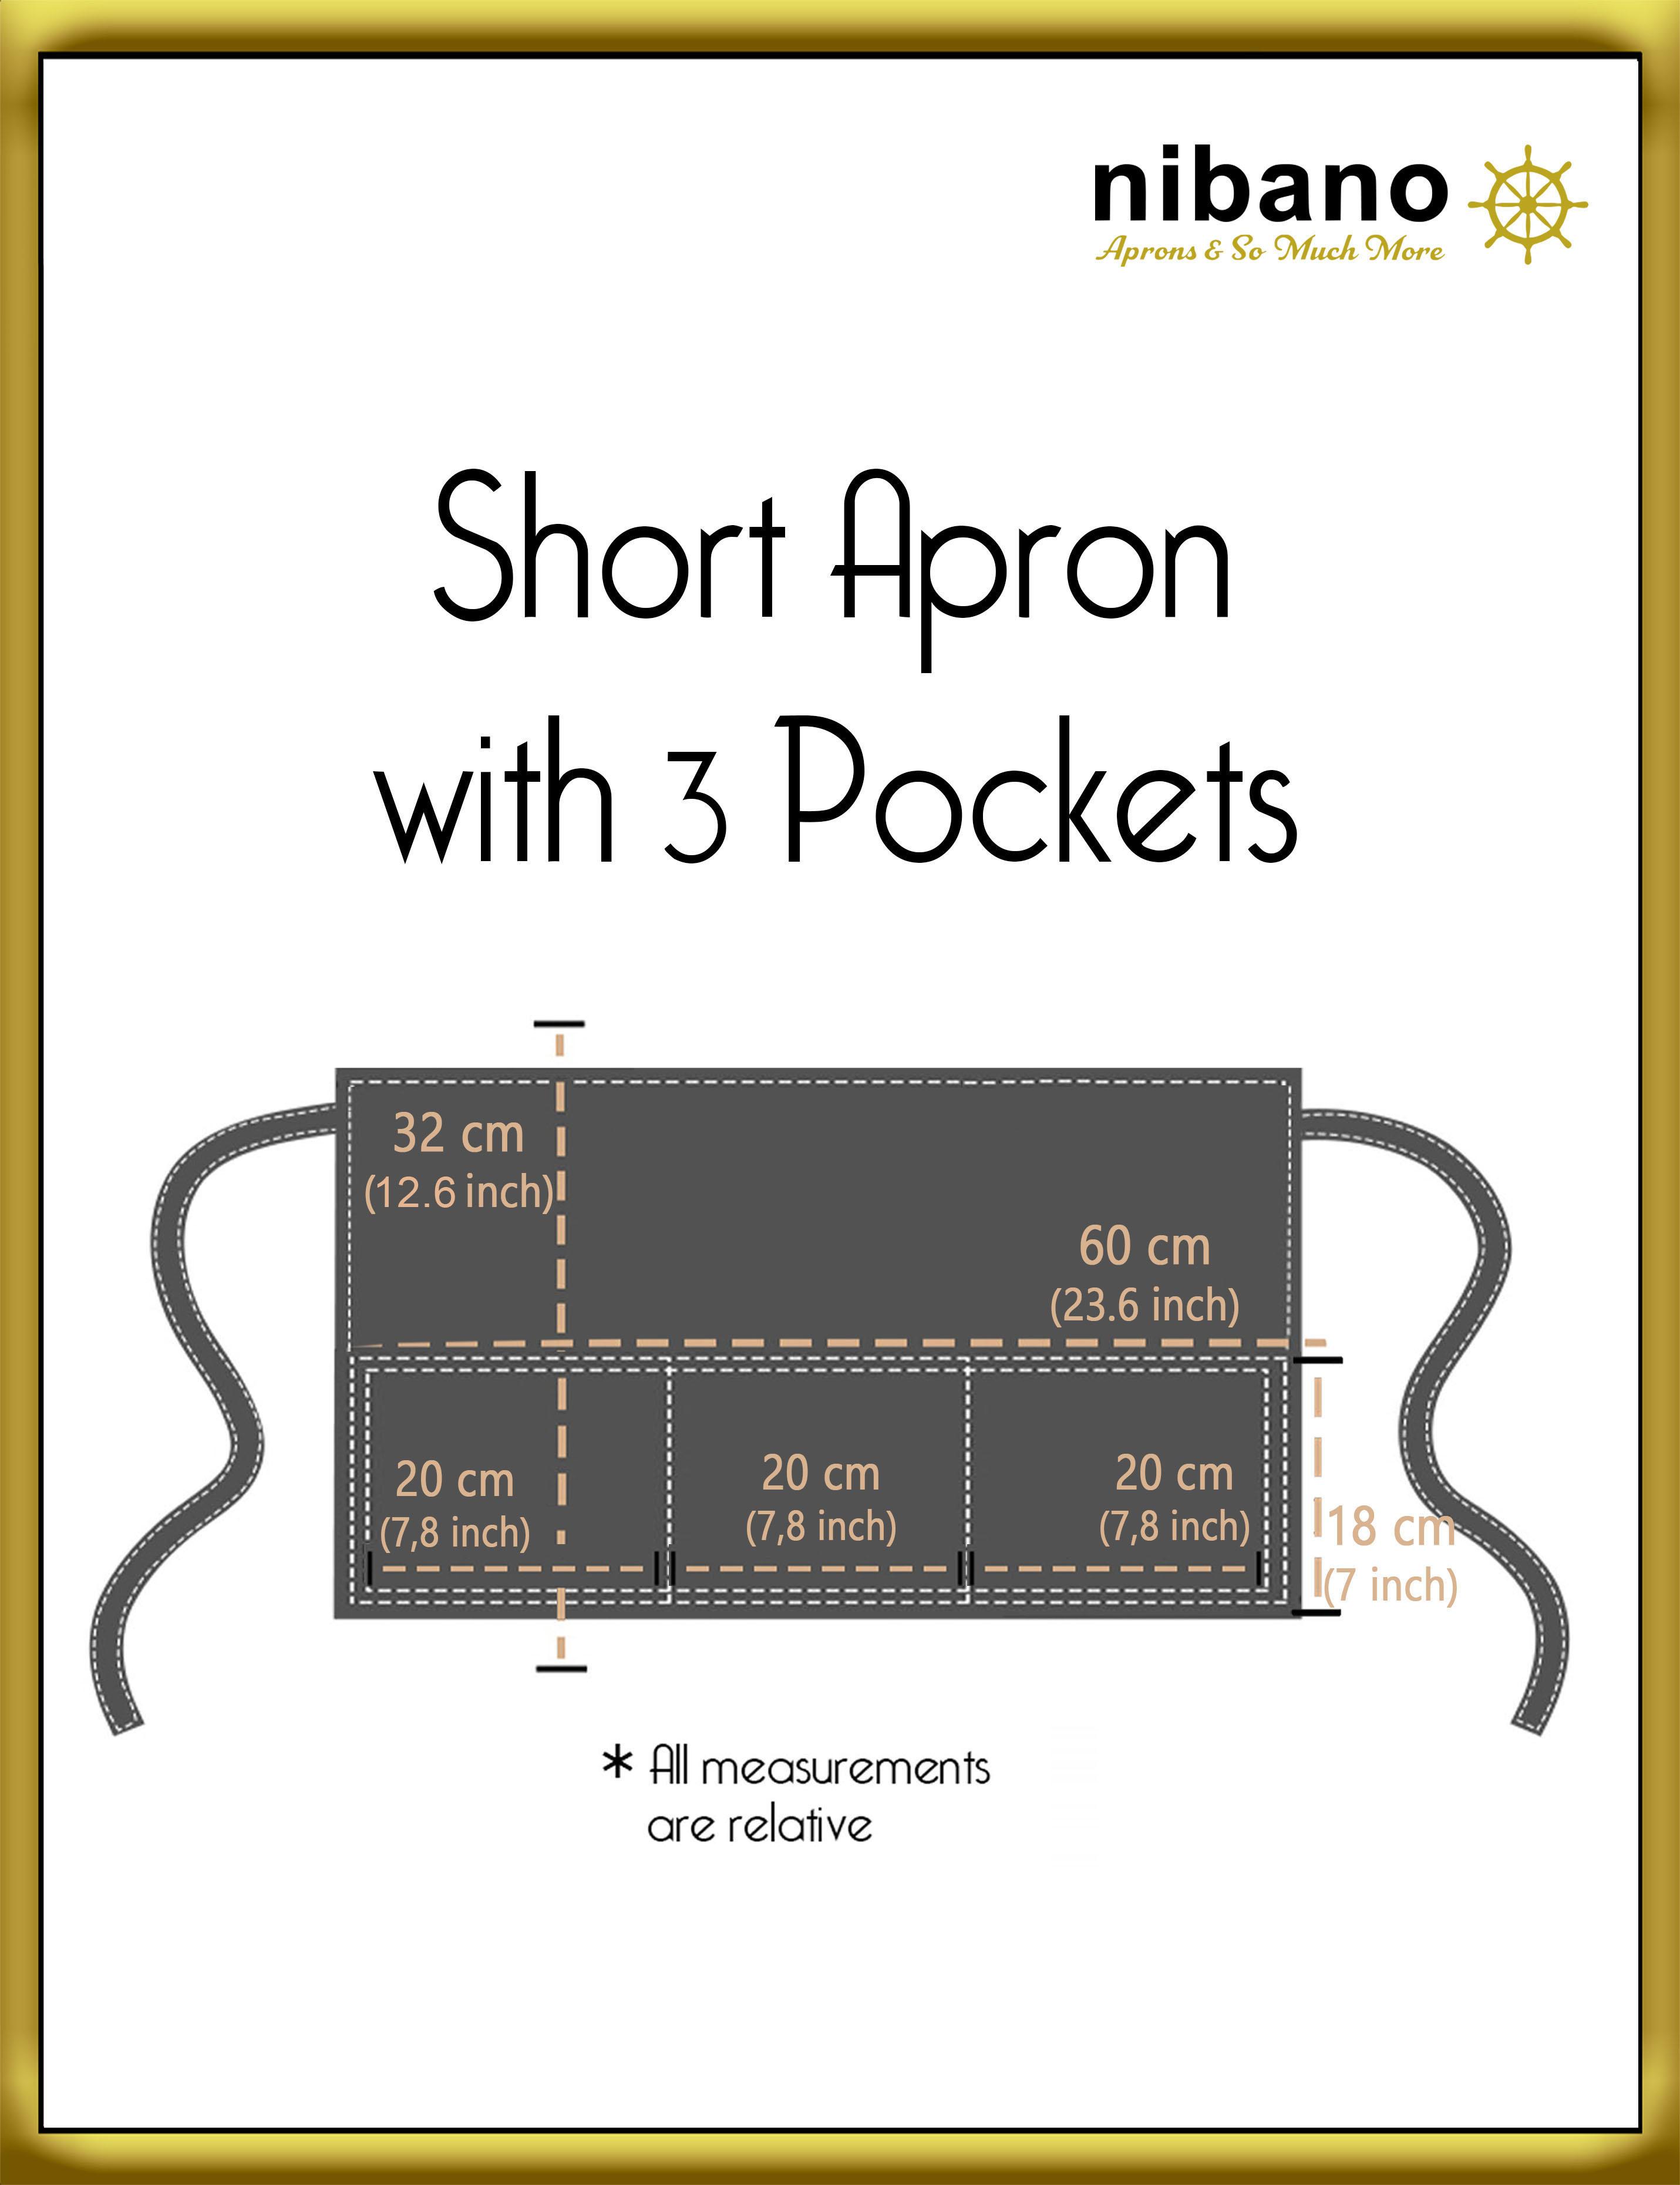 Personalised short bar aprons dimensions full colour printed